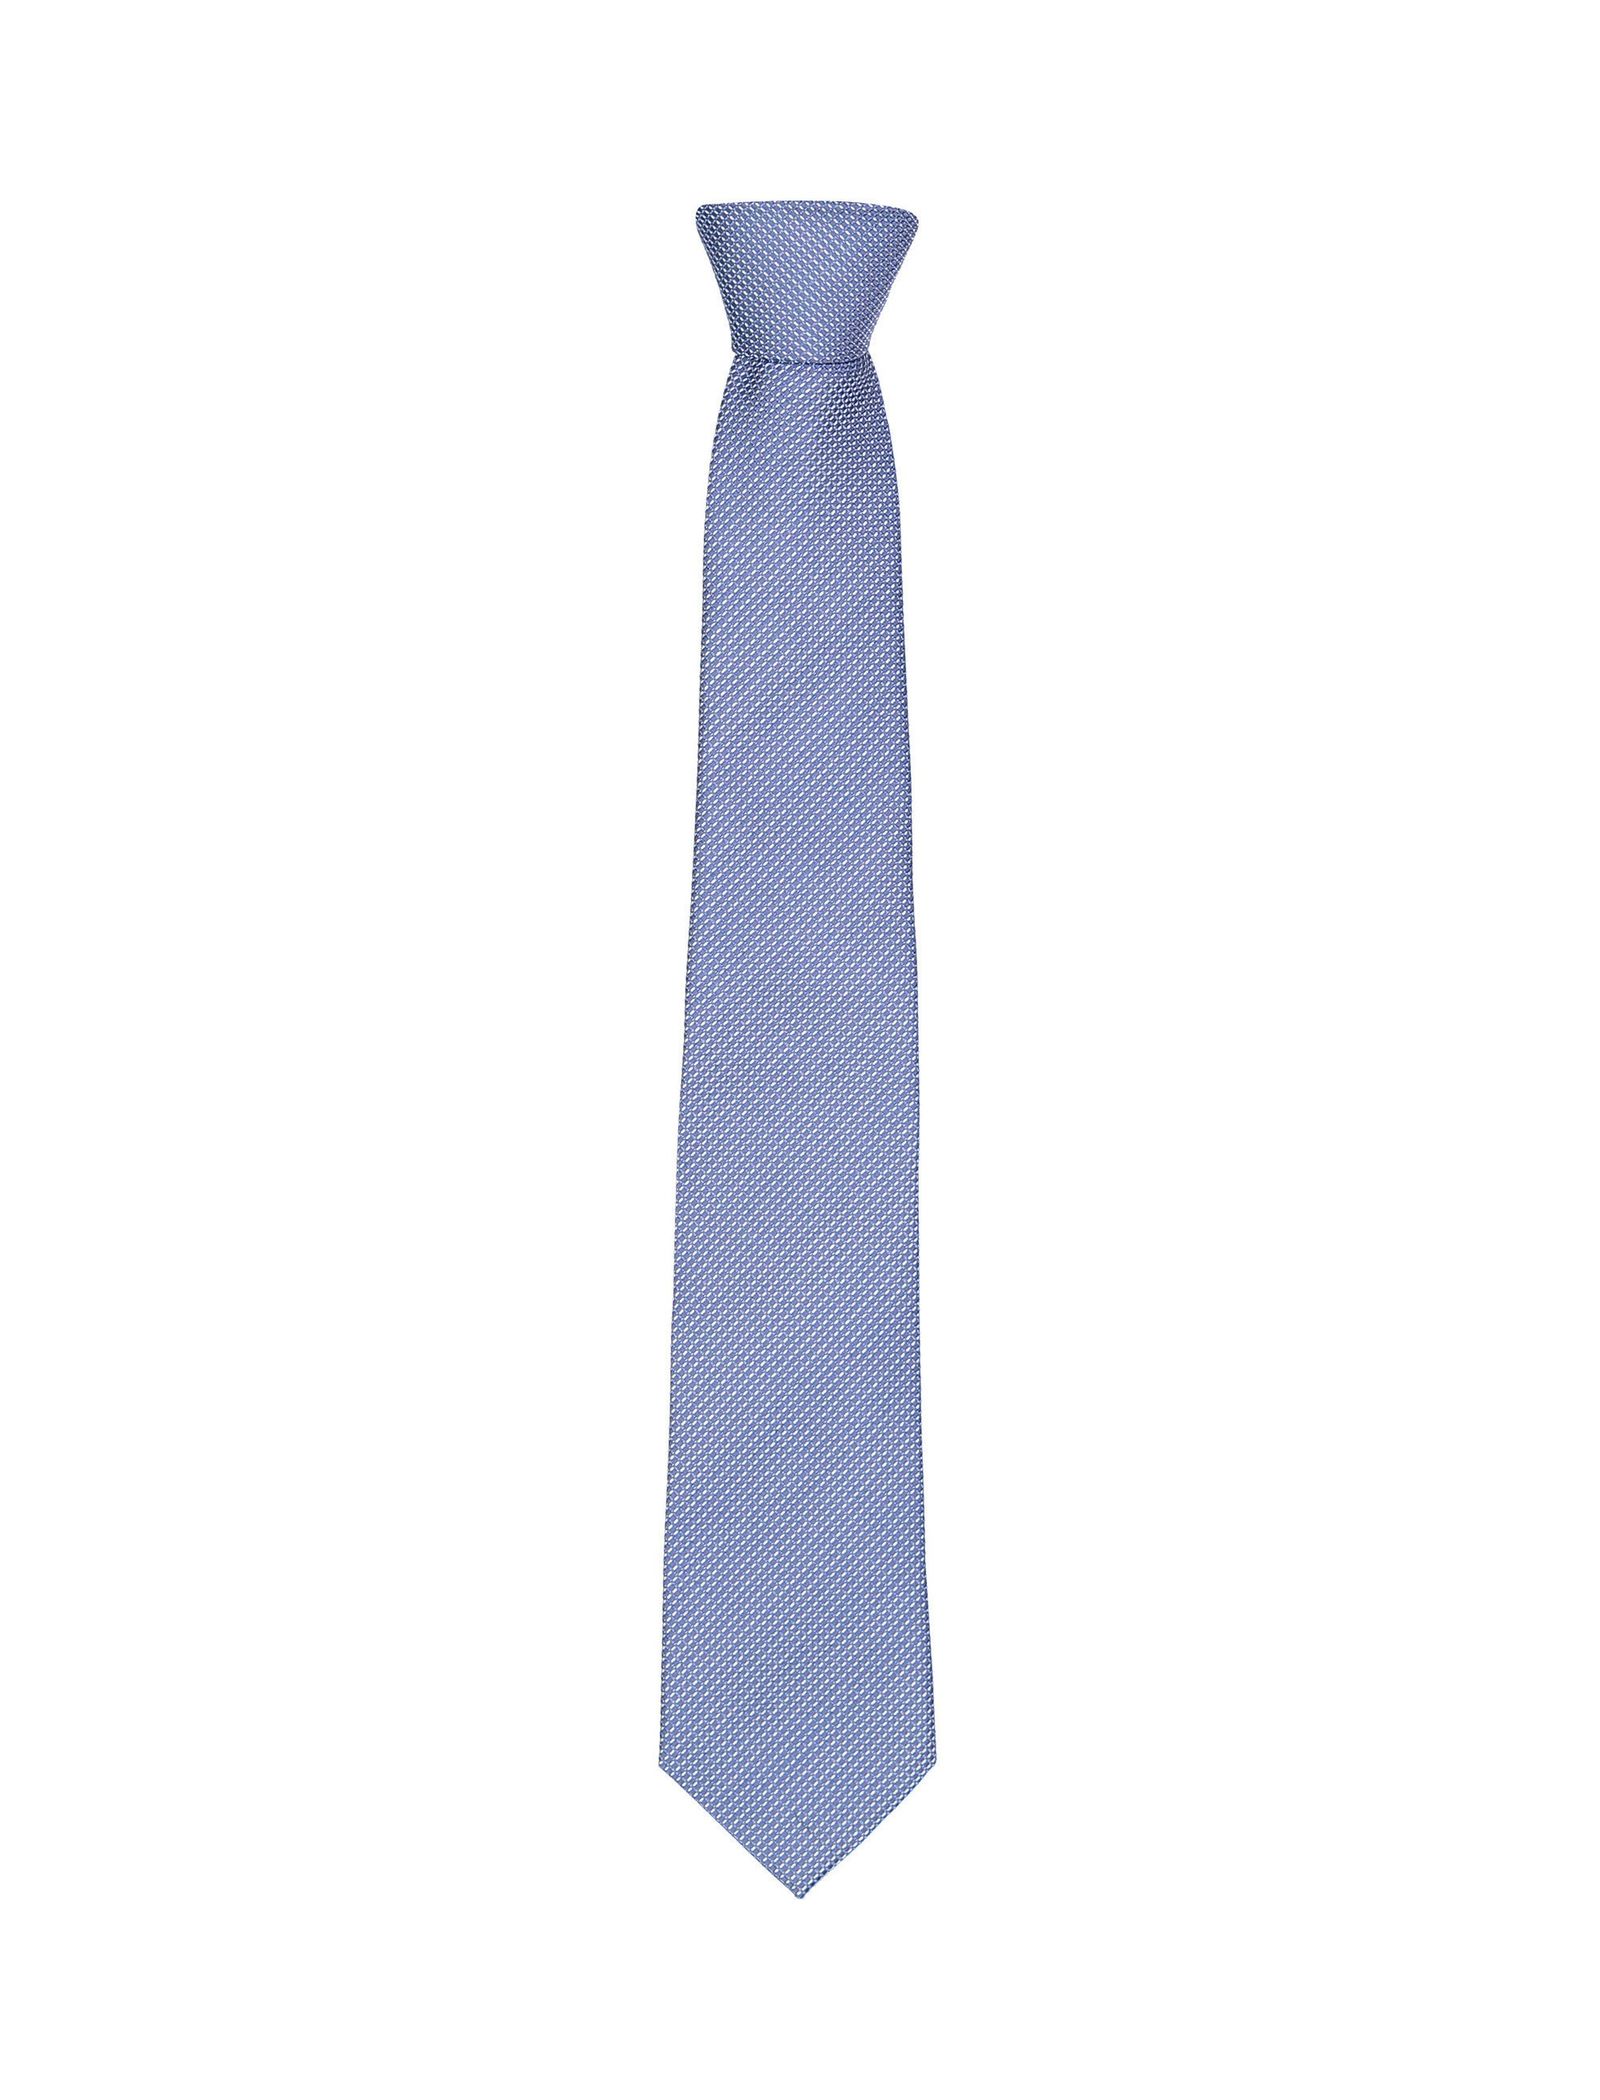 کراوات مانگو مدل 23090555 تک سایز - آبي روشن - 1